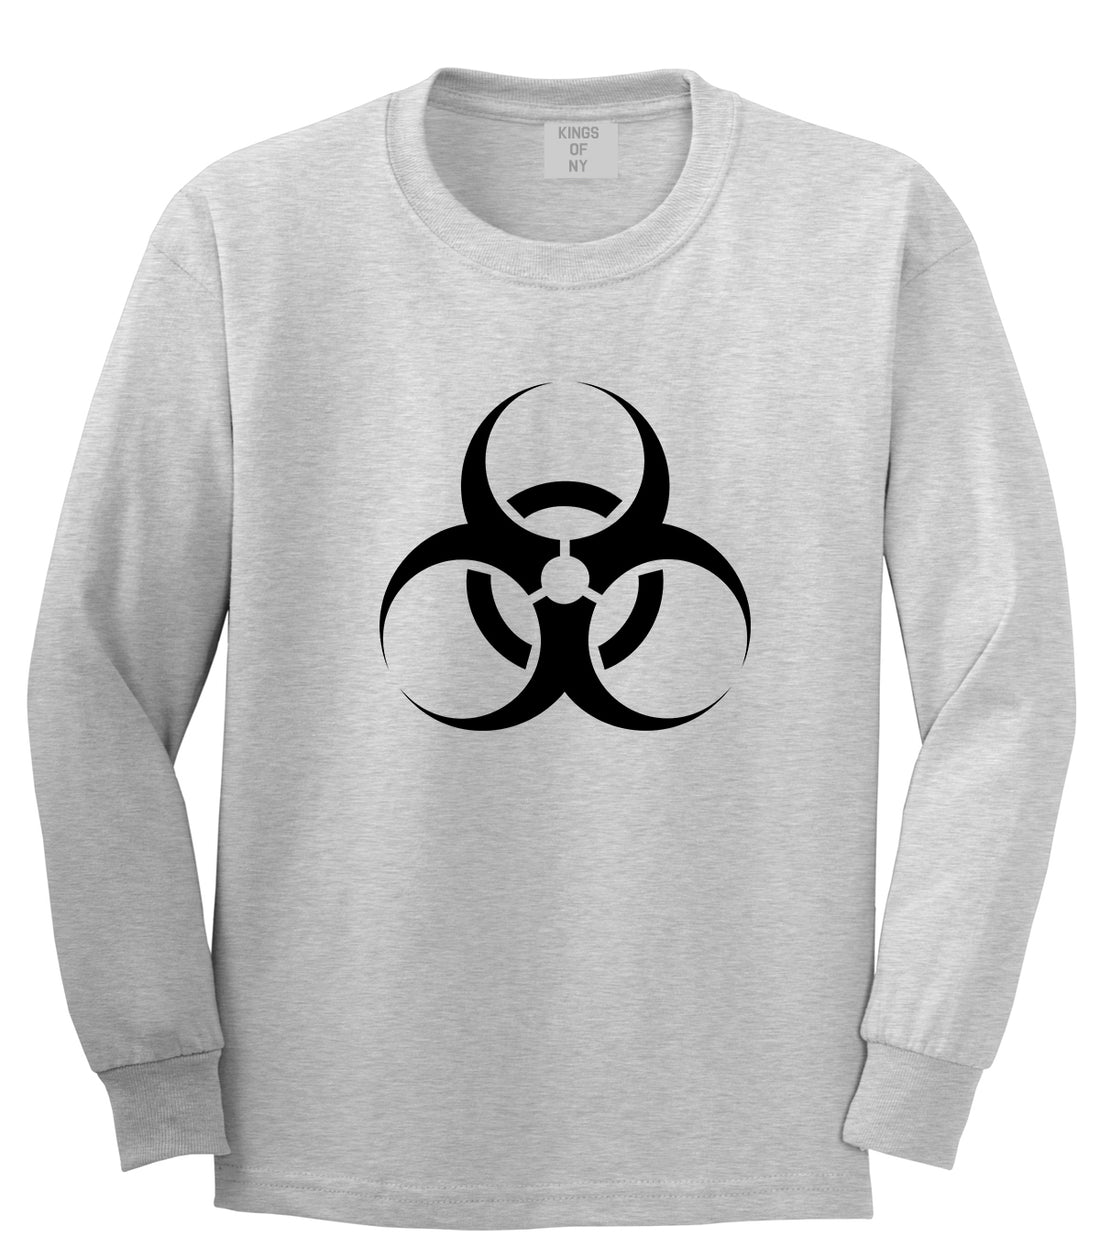 Biohazard Symbol Grey Long Sleeve T-Shirt by Kings Of NY